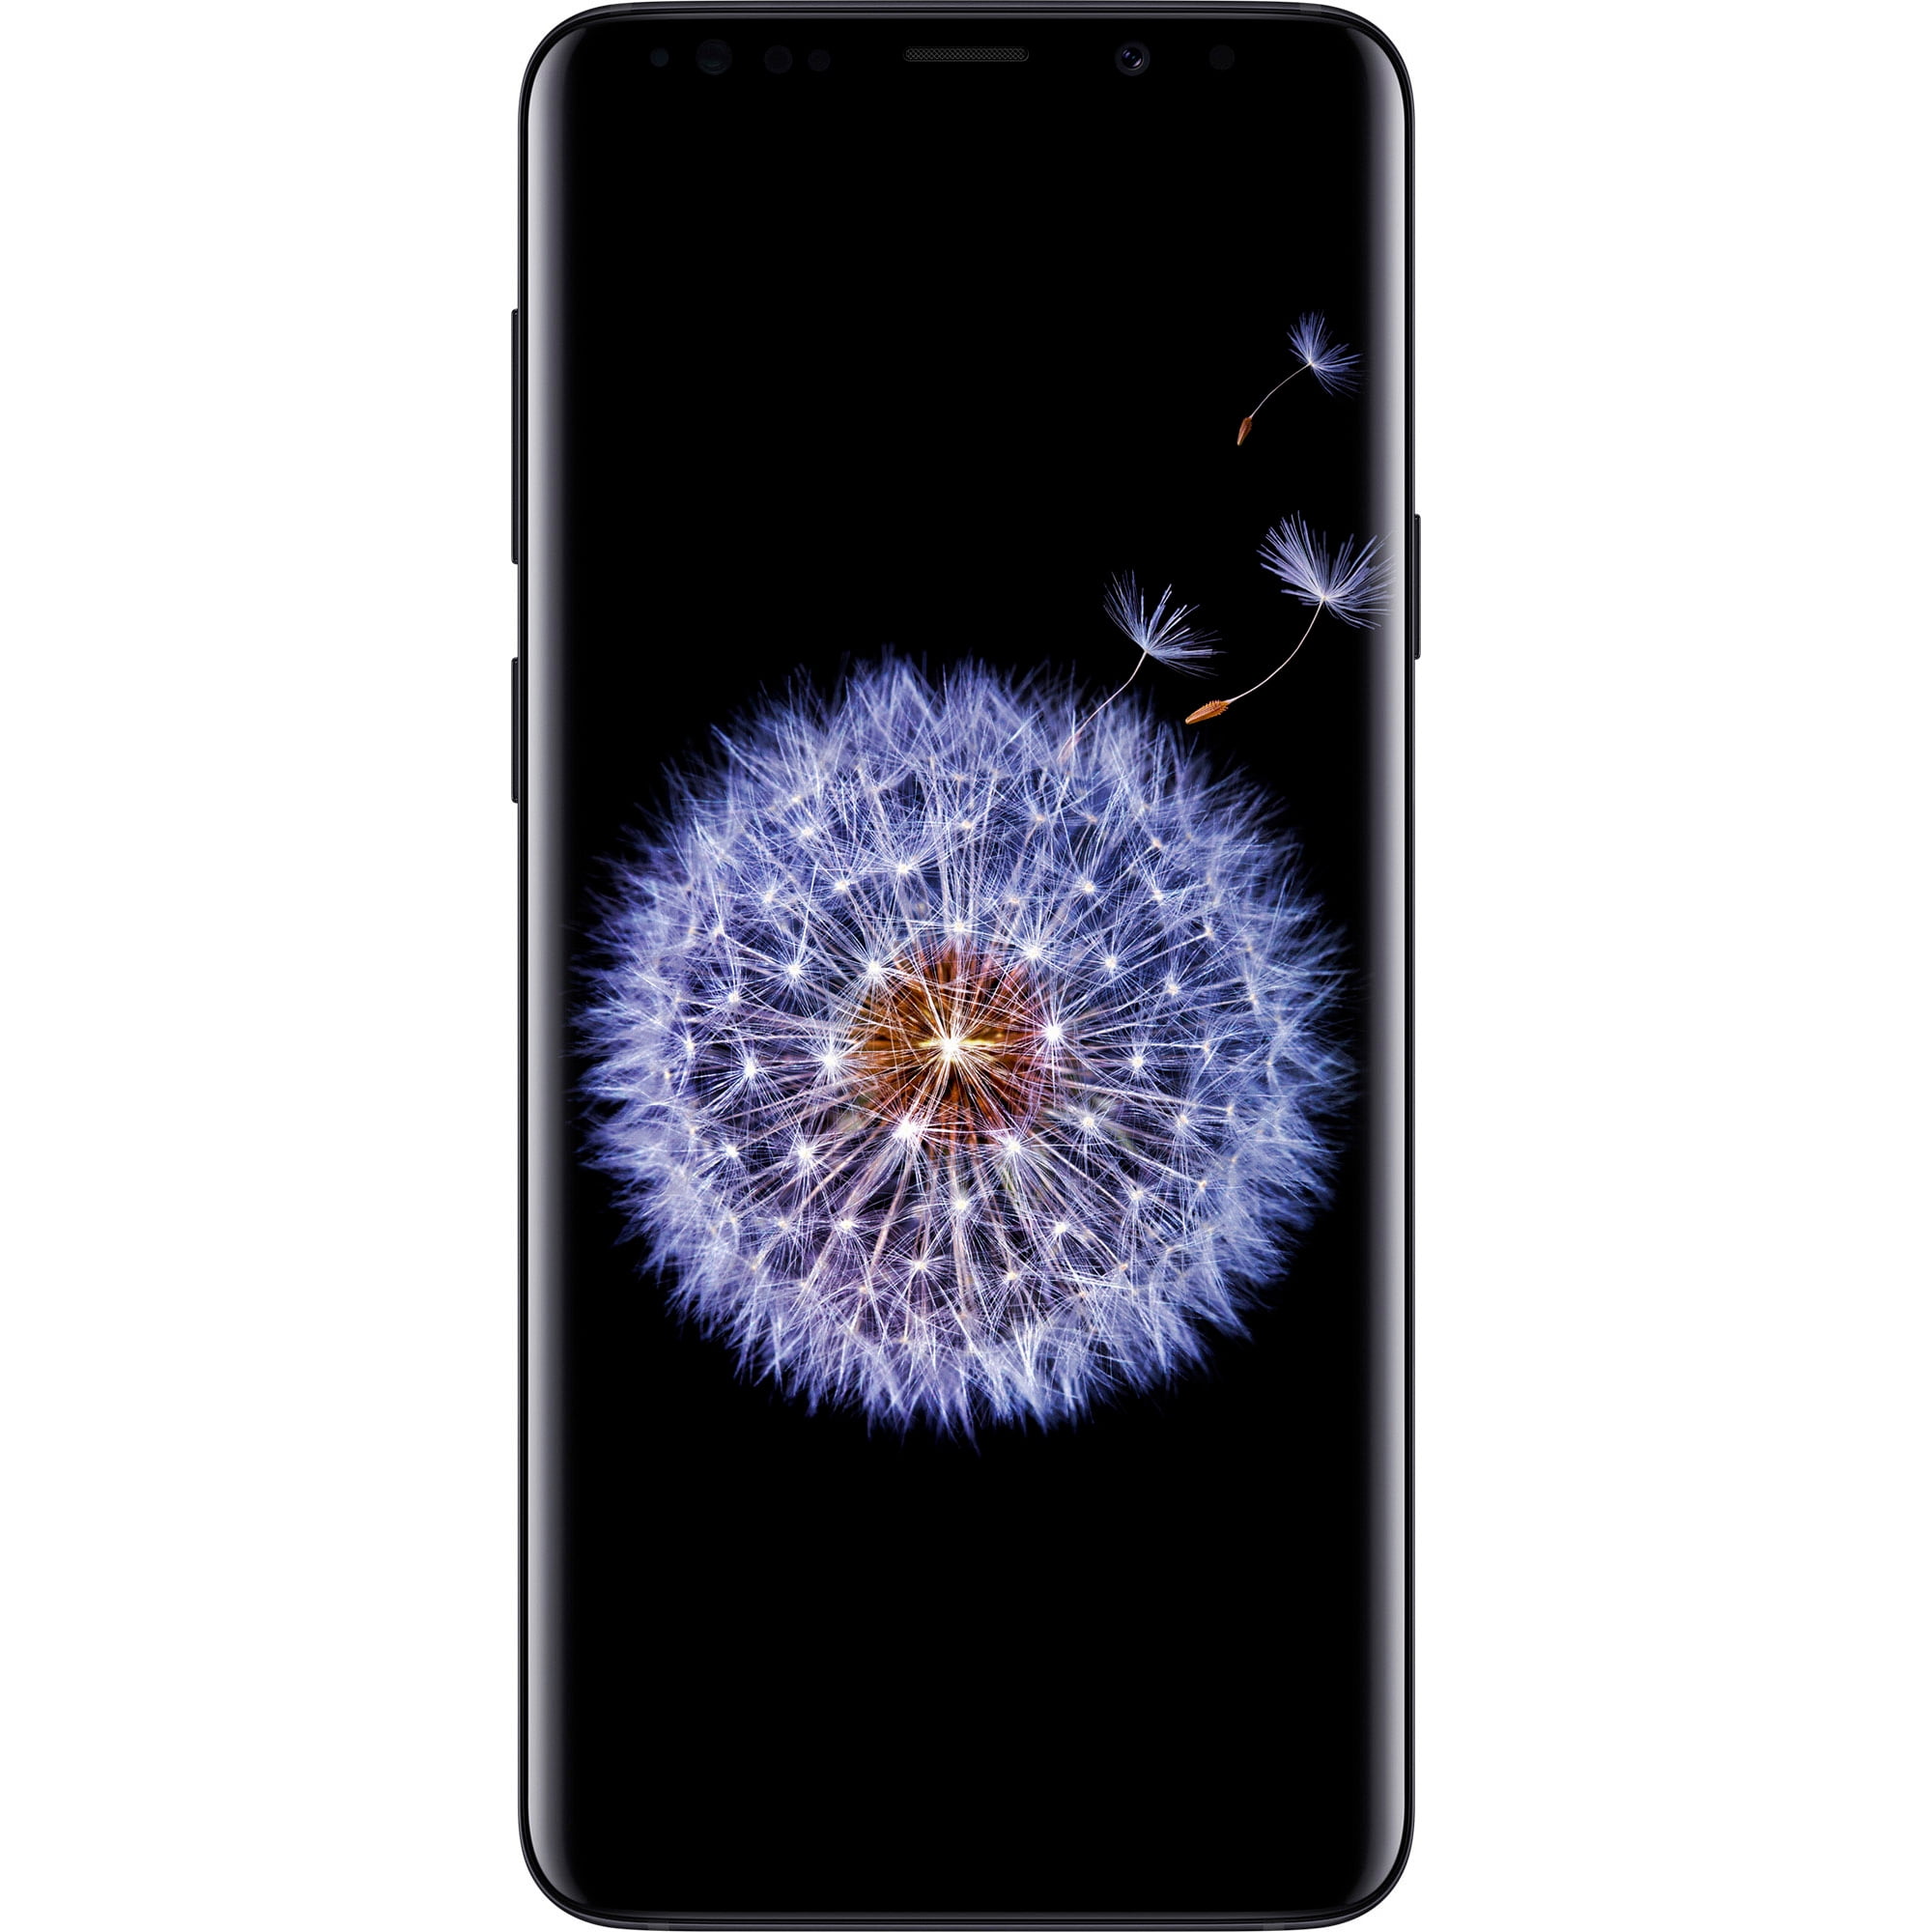 Total Wireless Samsung Galaxy S9 Plus LTE Prepaid Smartphone, Black